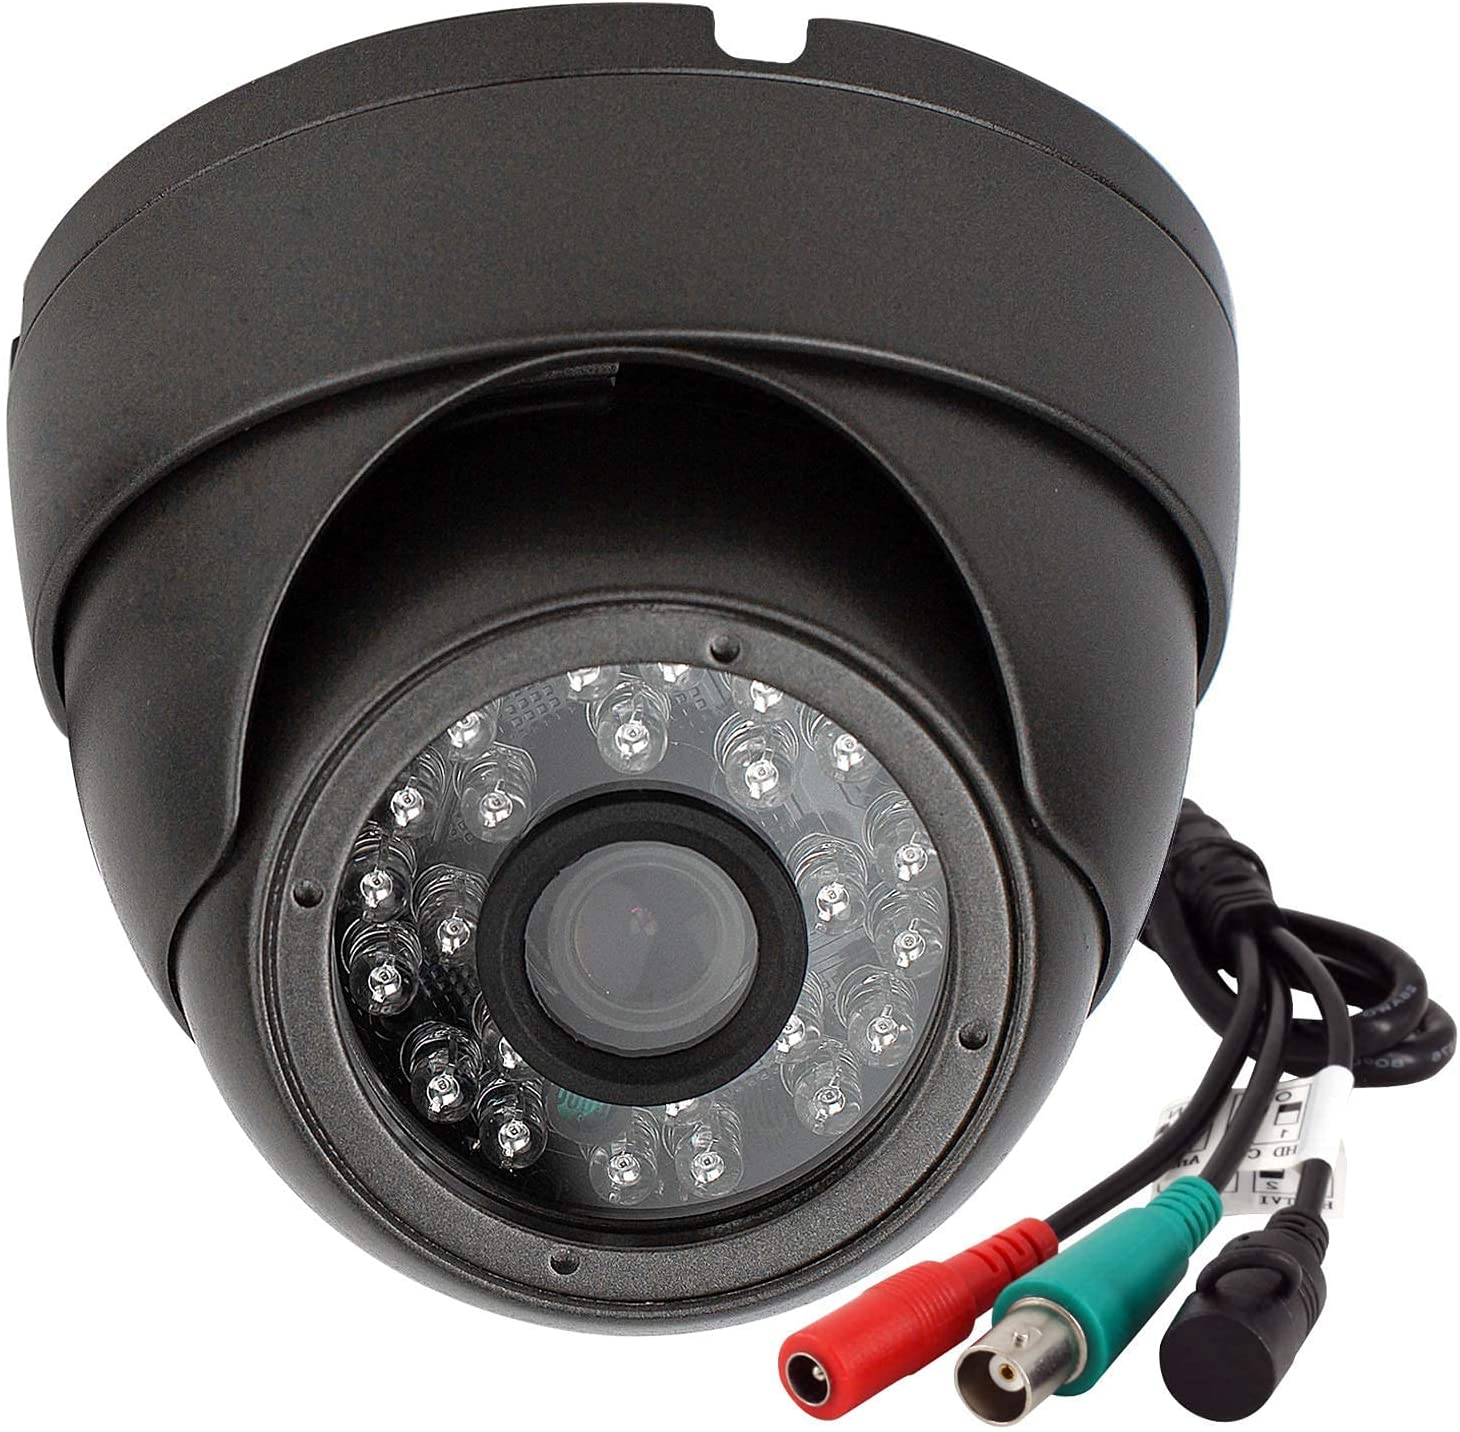 Analog CCTV Camera HD 1080P 4-in-1 (TVI/AHD/CVI/960H Analog) Security Dome Camera Outdoor Metal Housing, 24 IR-LEDs True Day & Night Monitoring 3.6mm Lens (Grey)